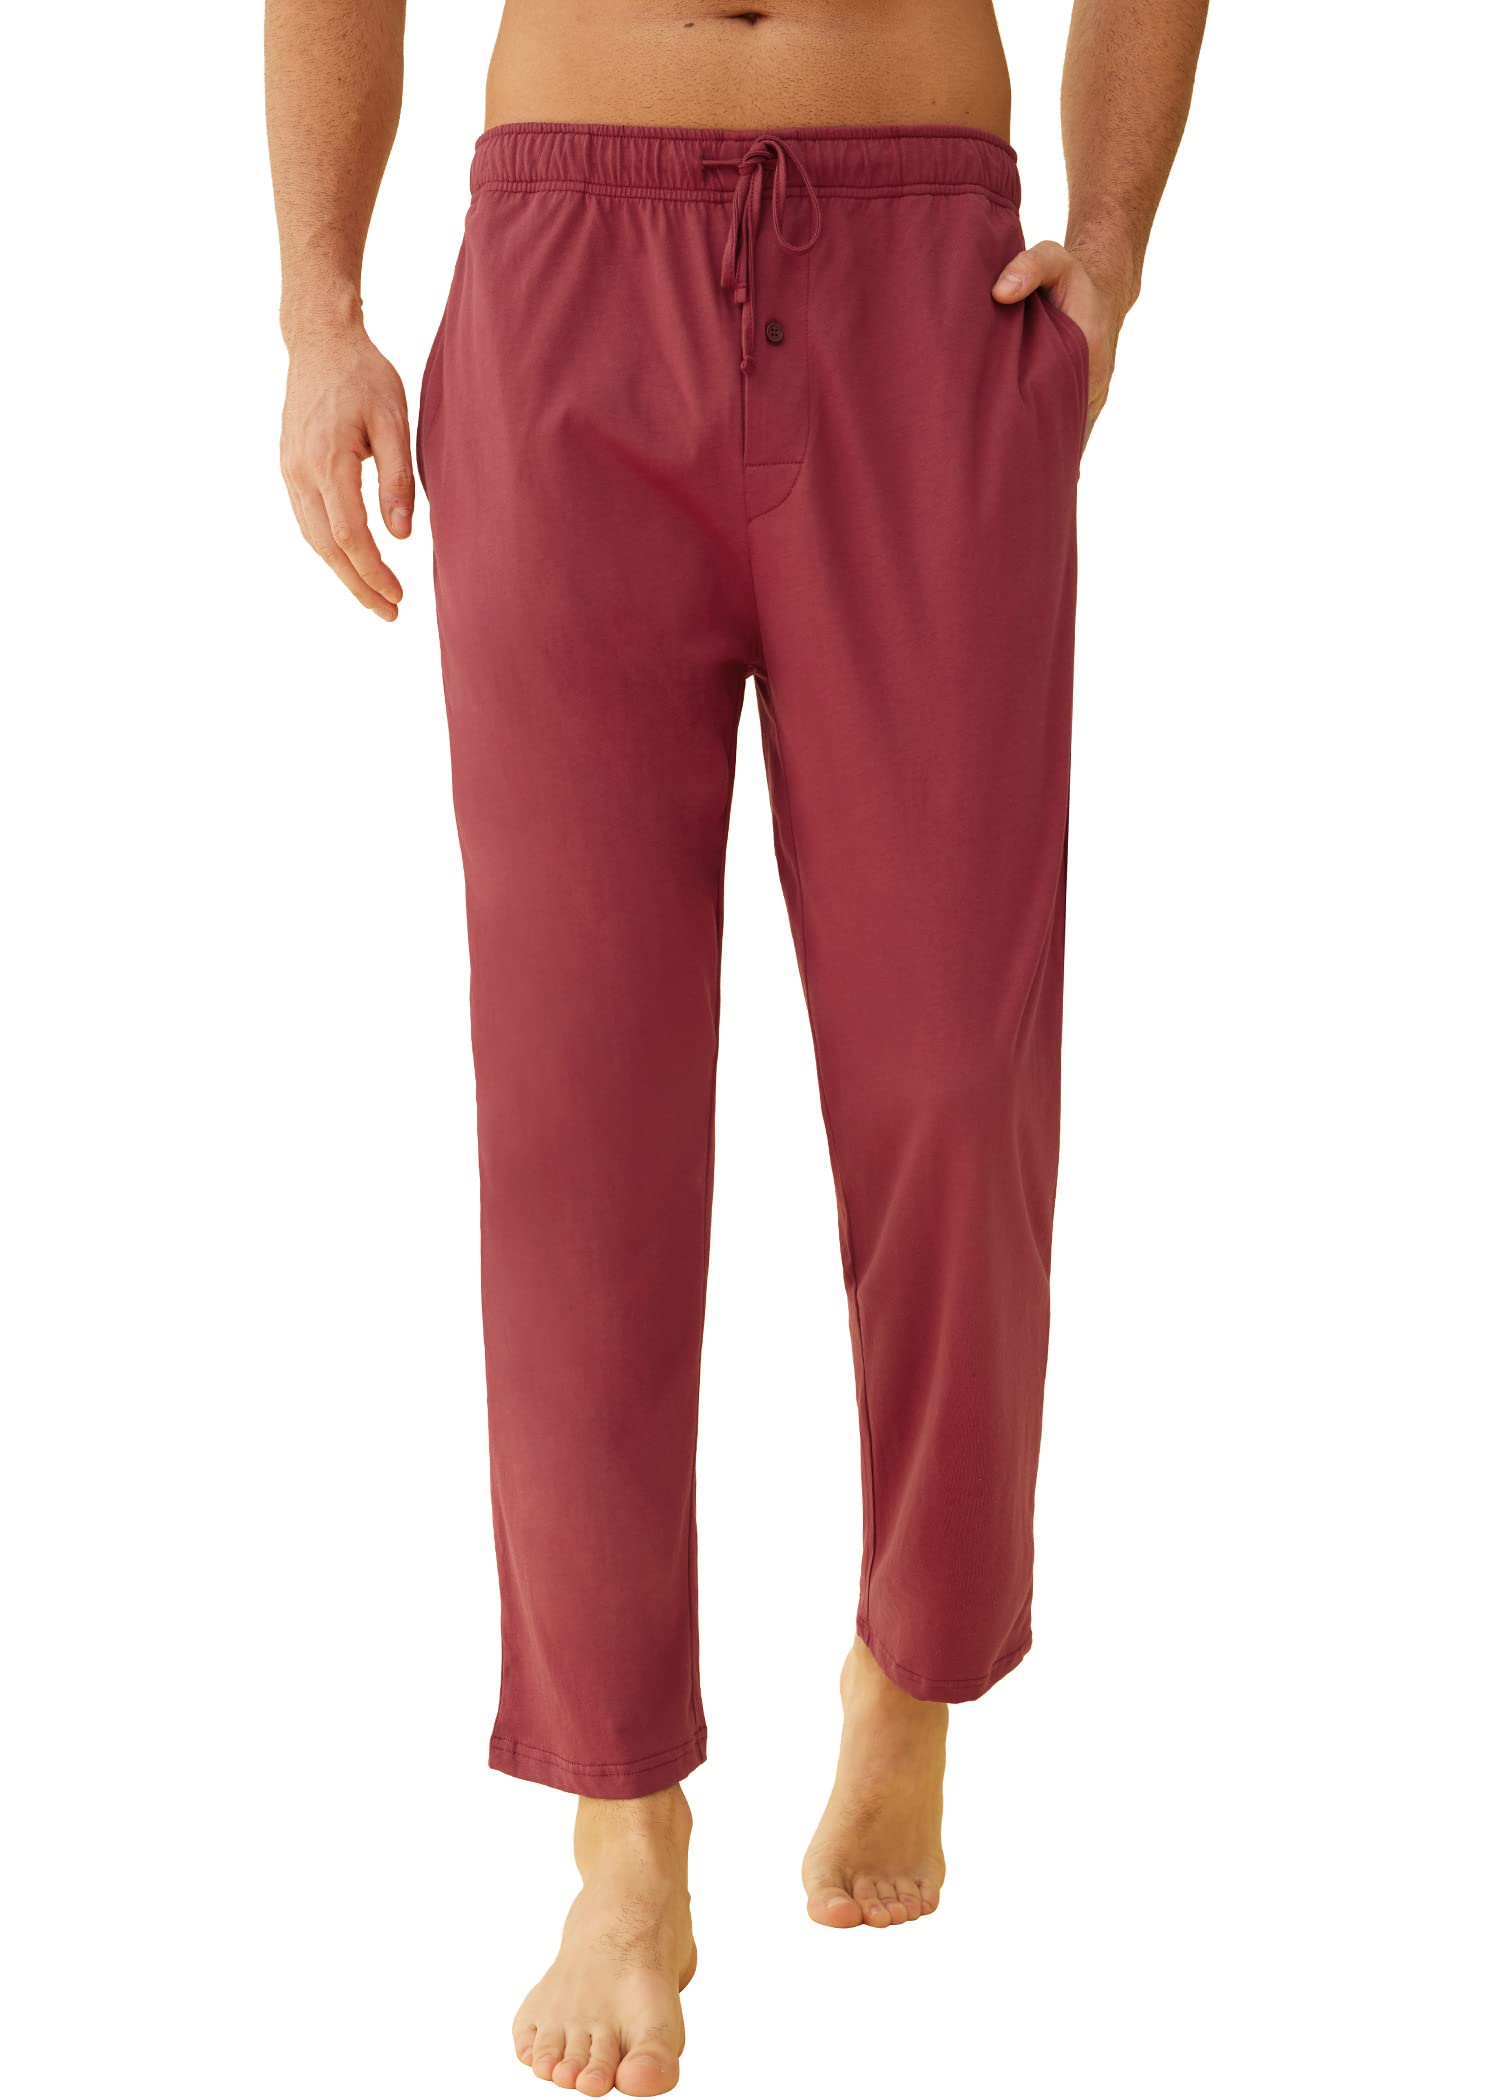 U S Polo Assn Navy Chambray Lounge Pants #I658, Pyjama, Ladies Pajama,  Women Pajama, Women Pyjama, महिलाओं का पजामा - Zedds, New Delhi | ID:  2852587017797